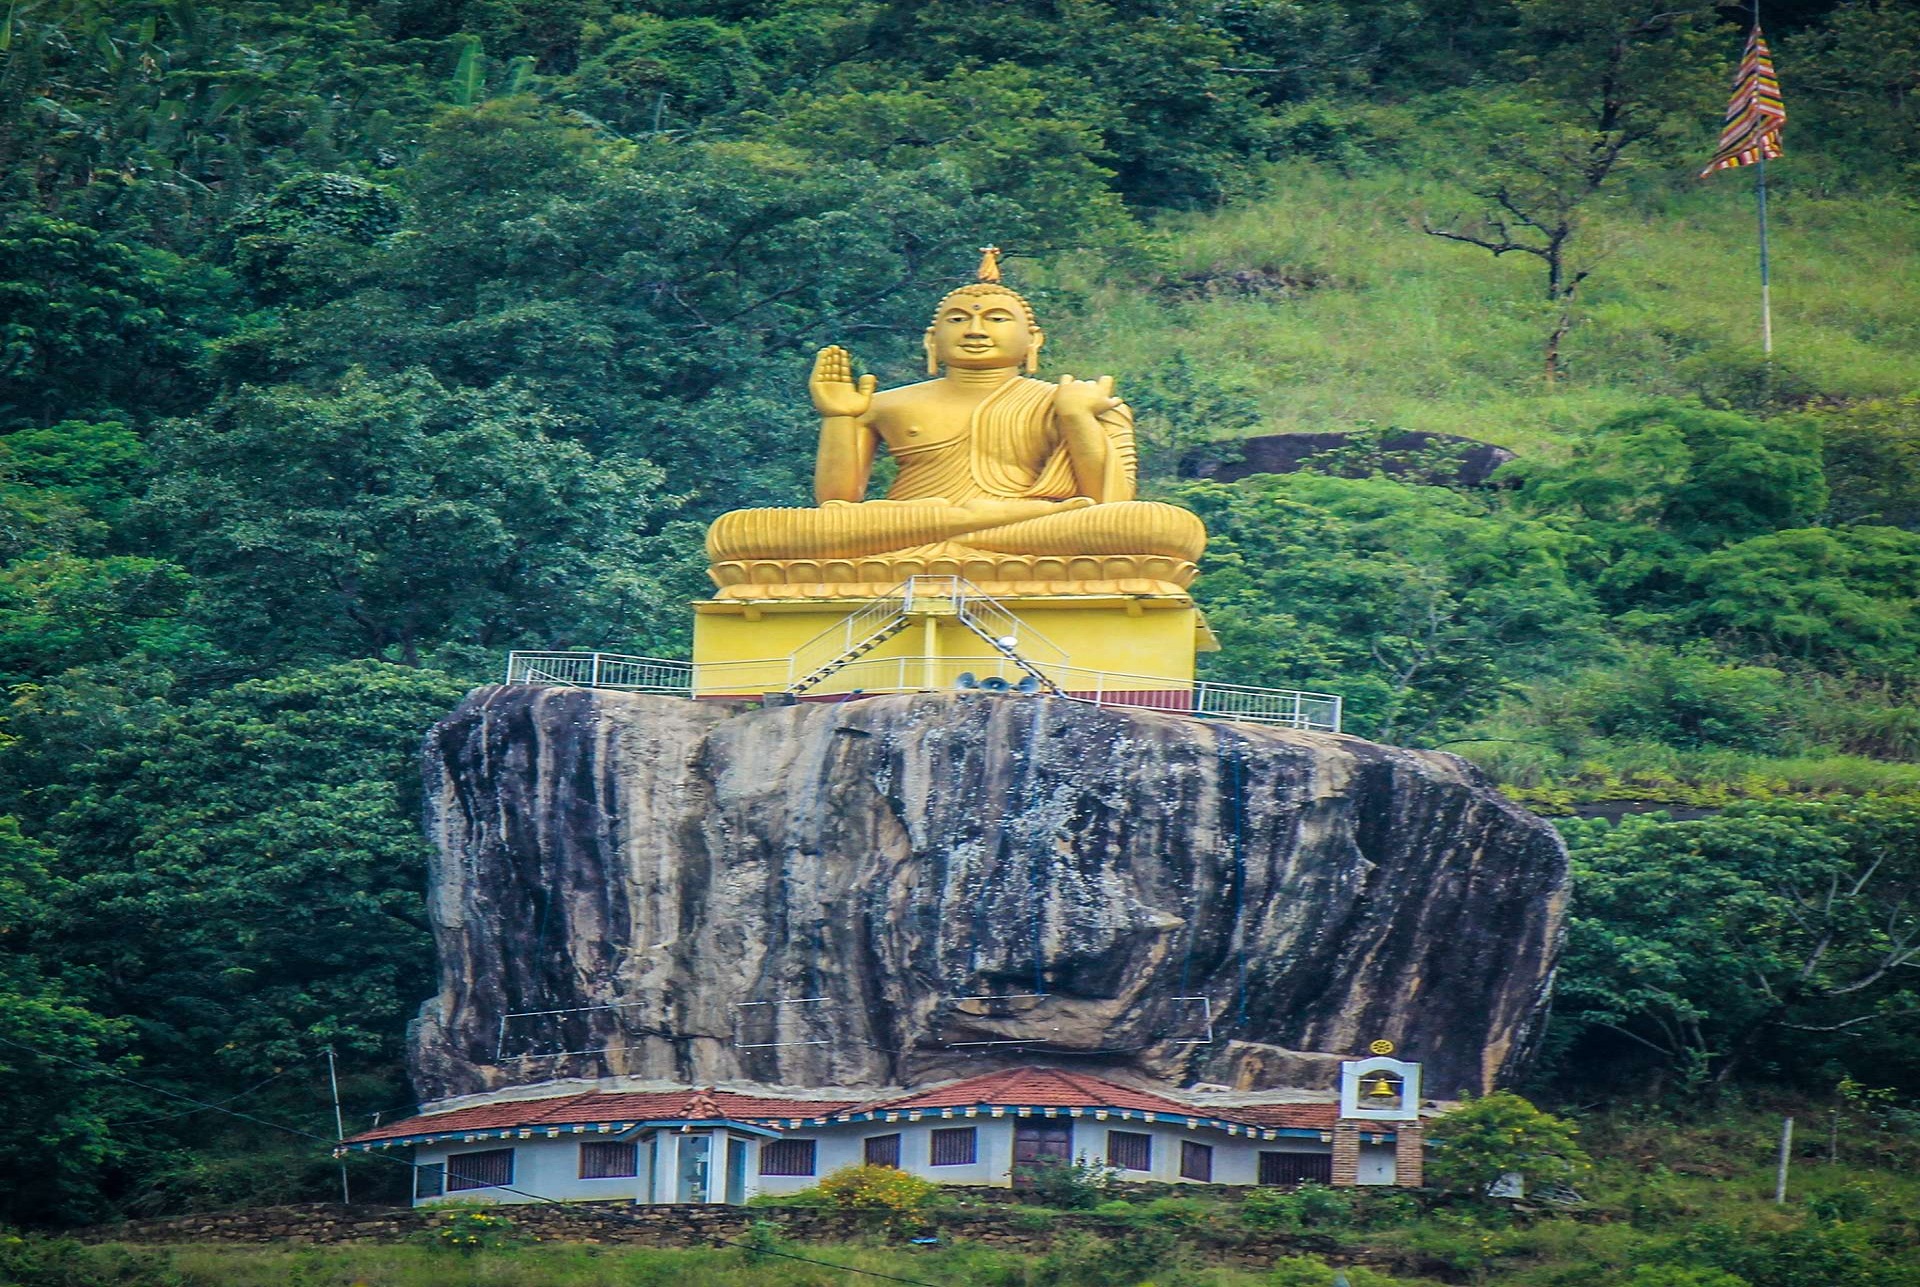 Aluvihara Temple in Sri Lanka